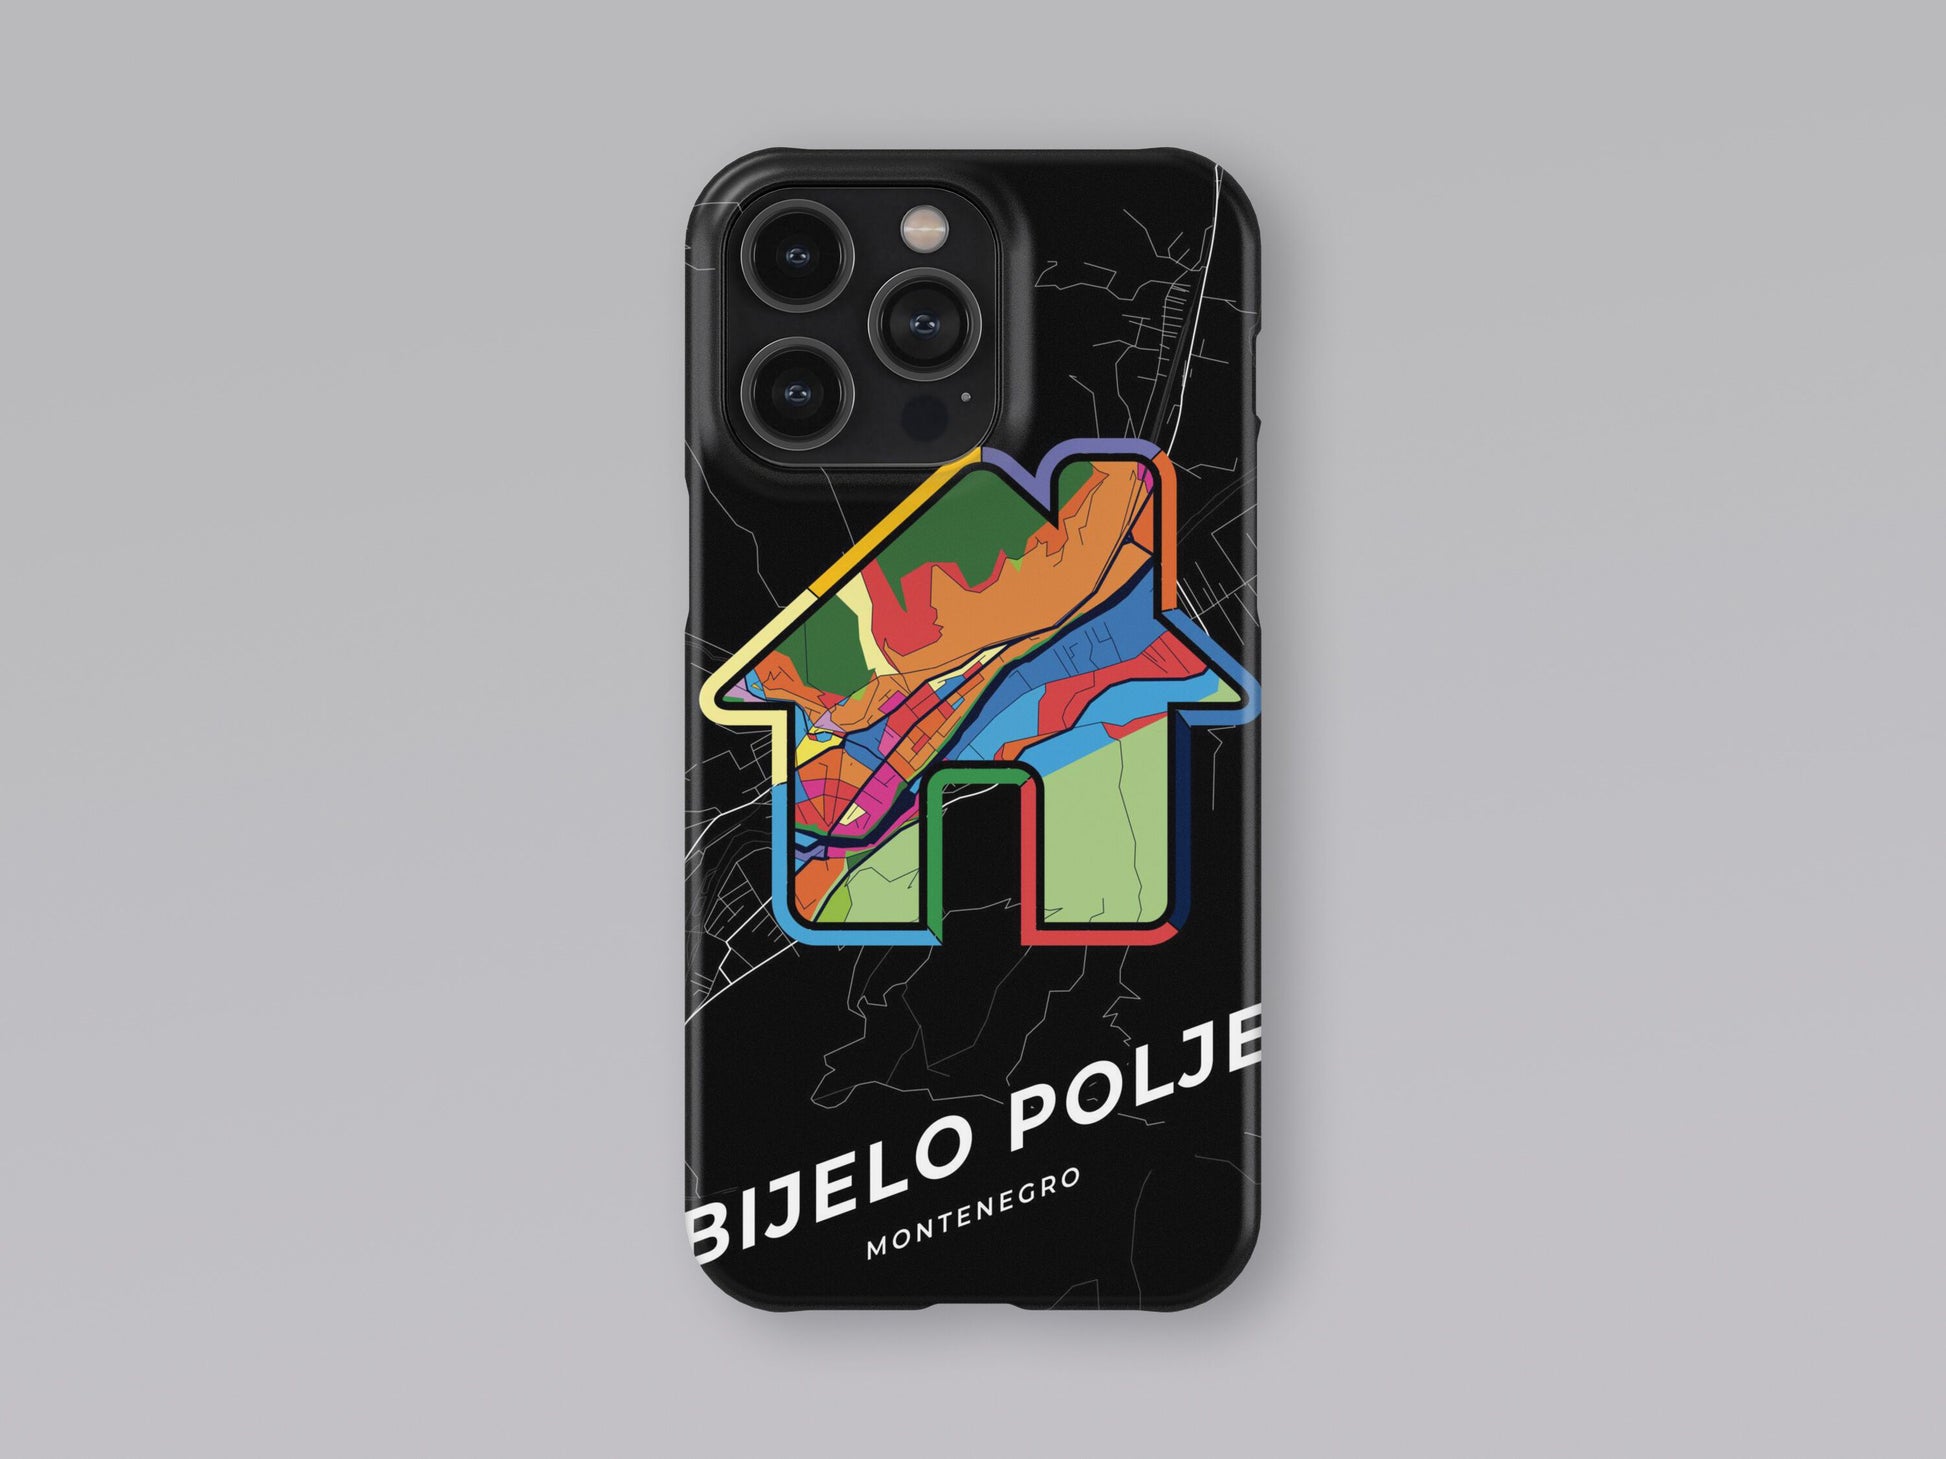 Bijelo Polje Montenegro slim phone case with colorful icon. Birthday, wedding or housewarming gift. Couple match cases. 3